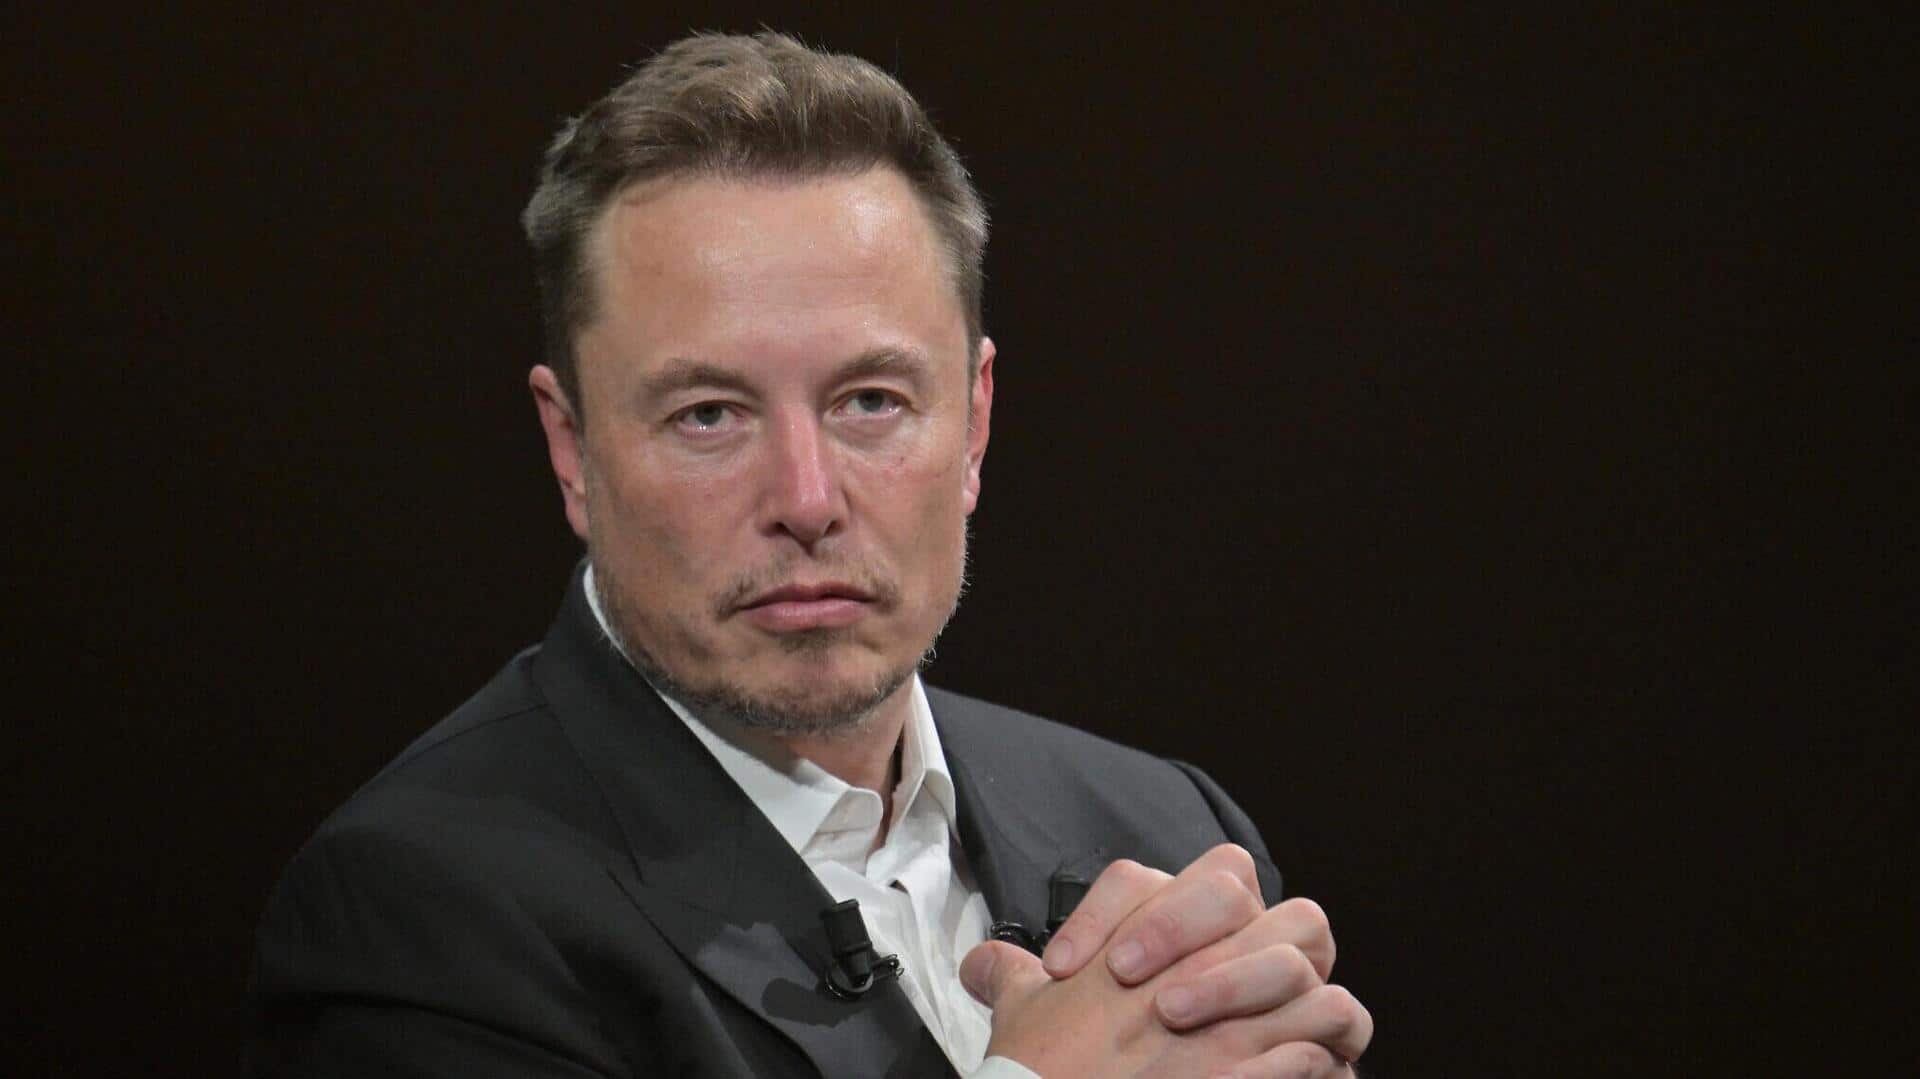 Elon Musk challenges SEC subpoena in Twitter investigation